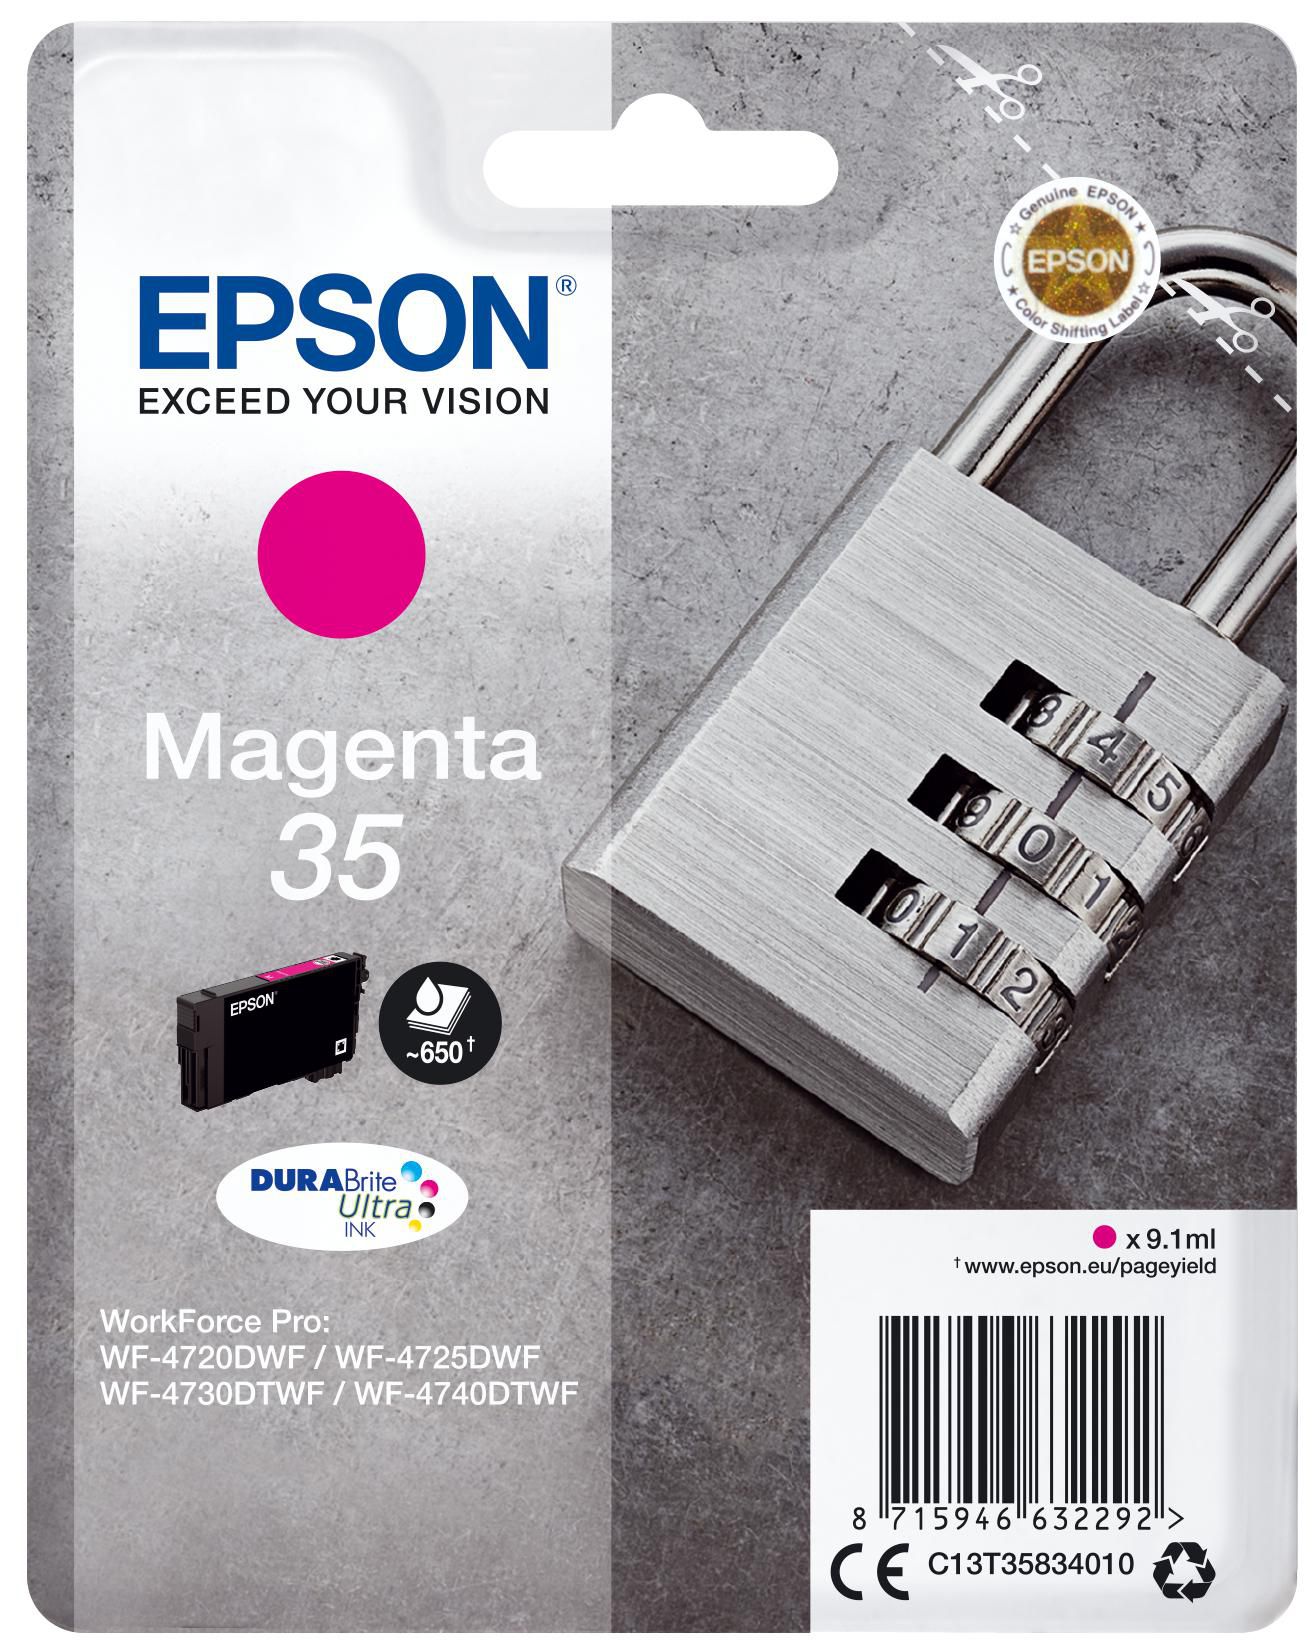 EPSON 35 Magenta Tintenpatrone